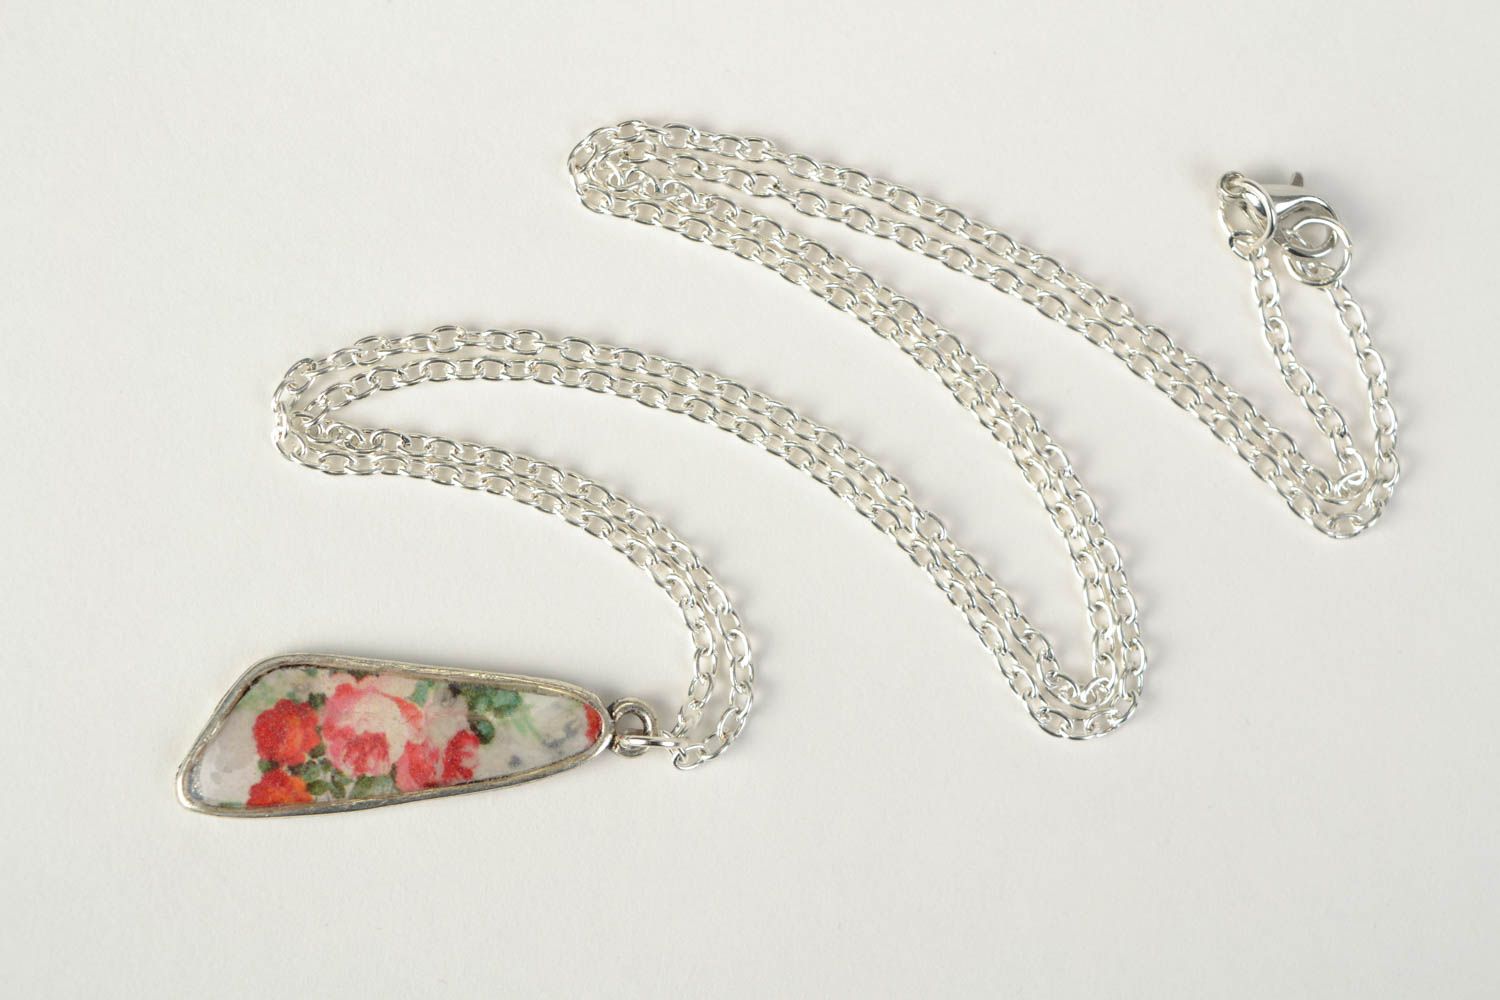 Handmade epoxy resin neck pendant with decoupage flowers for women photo 3